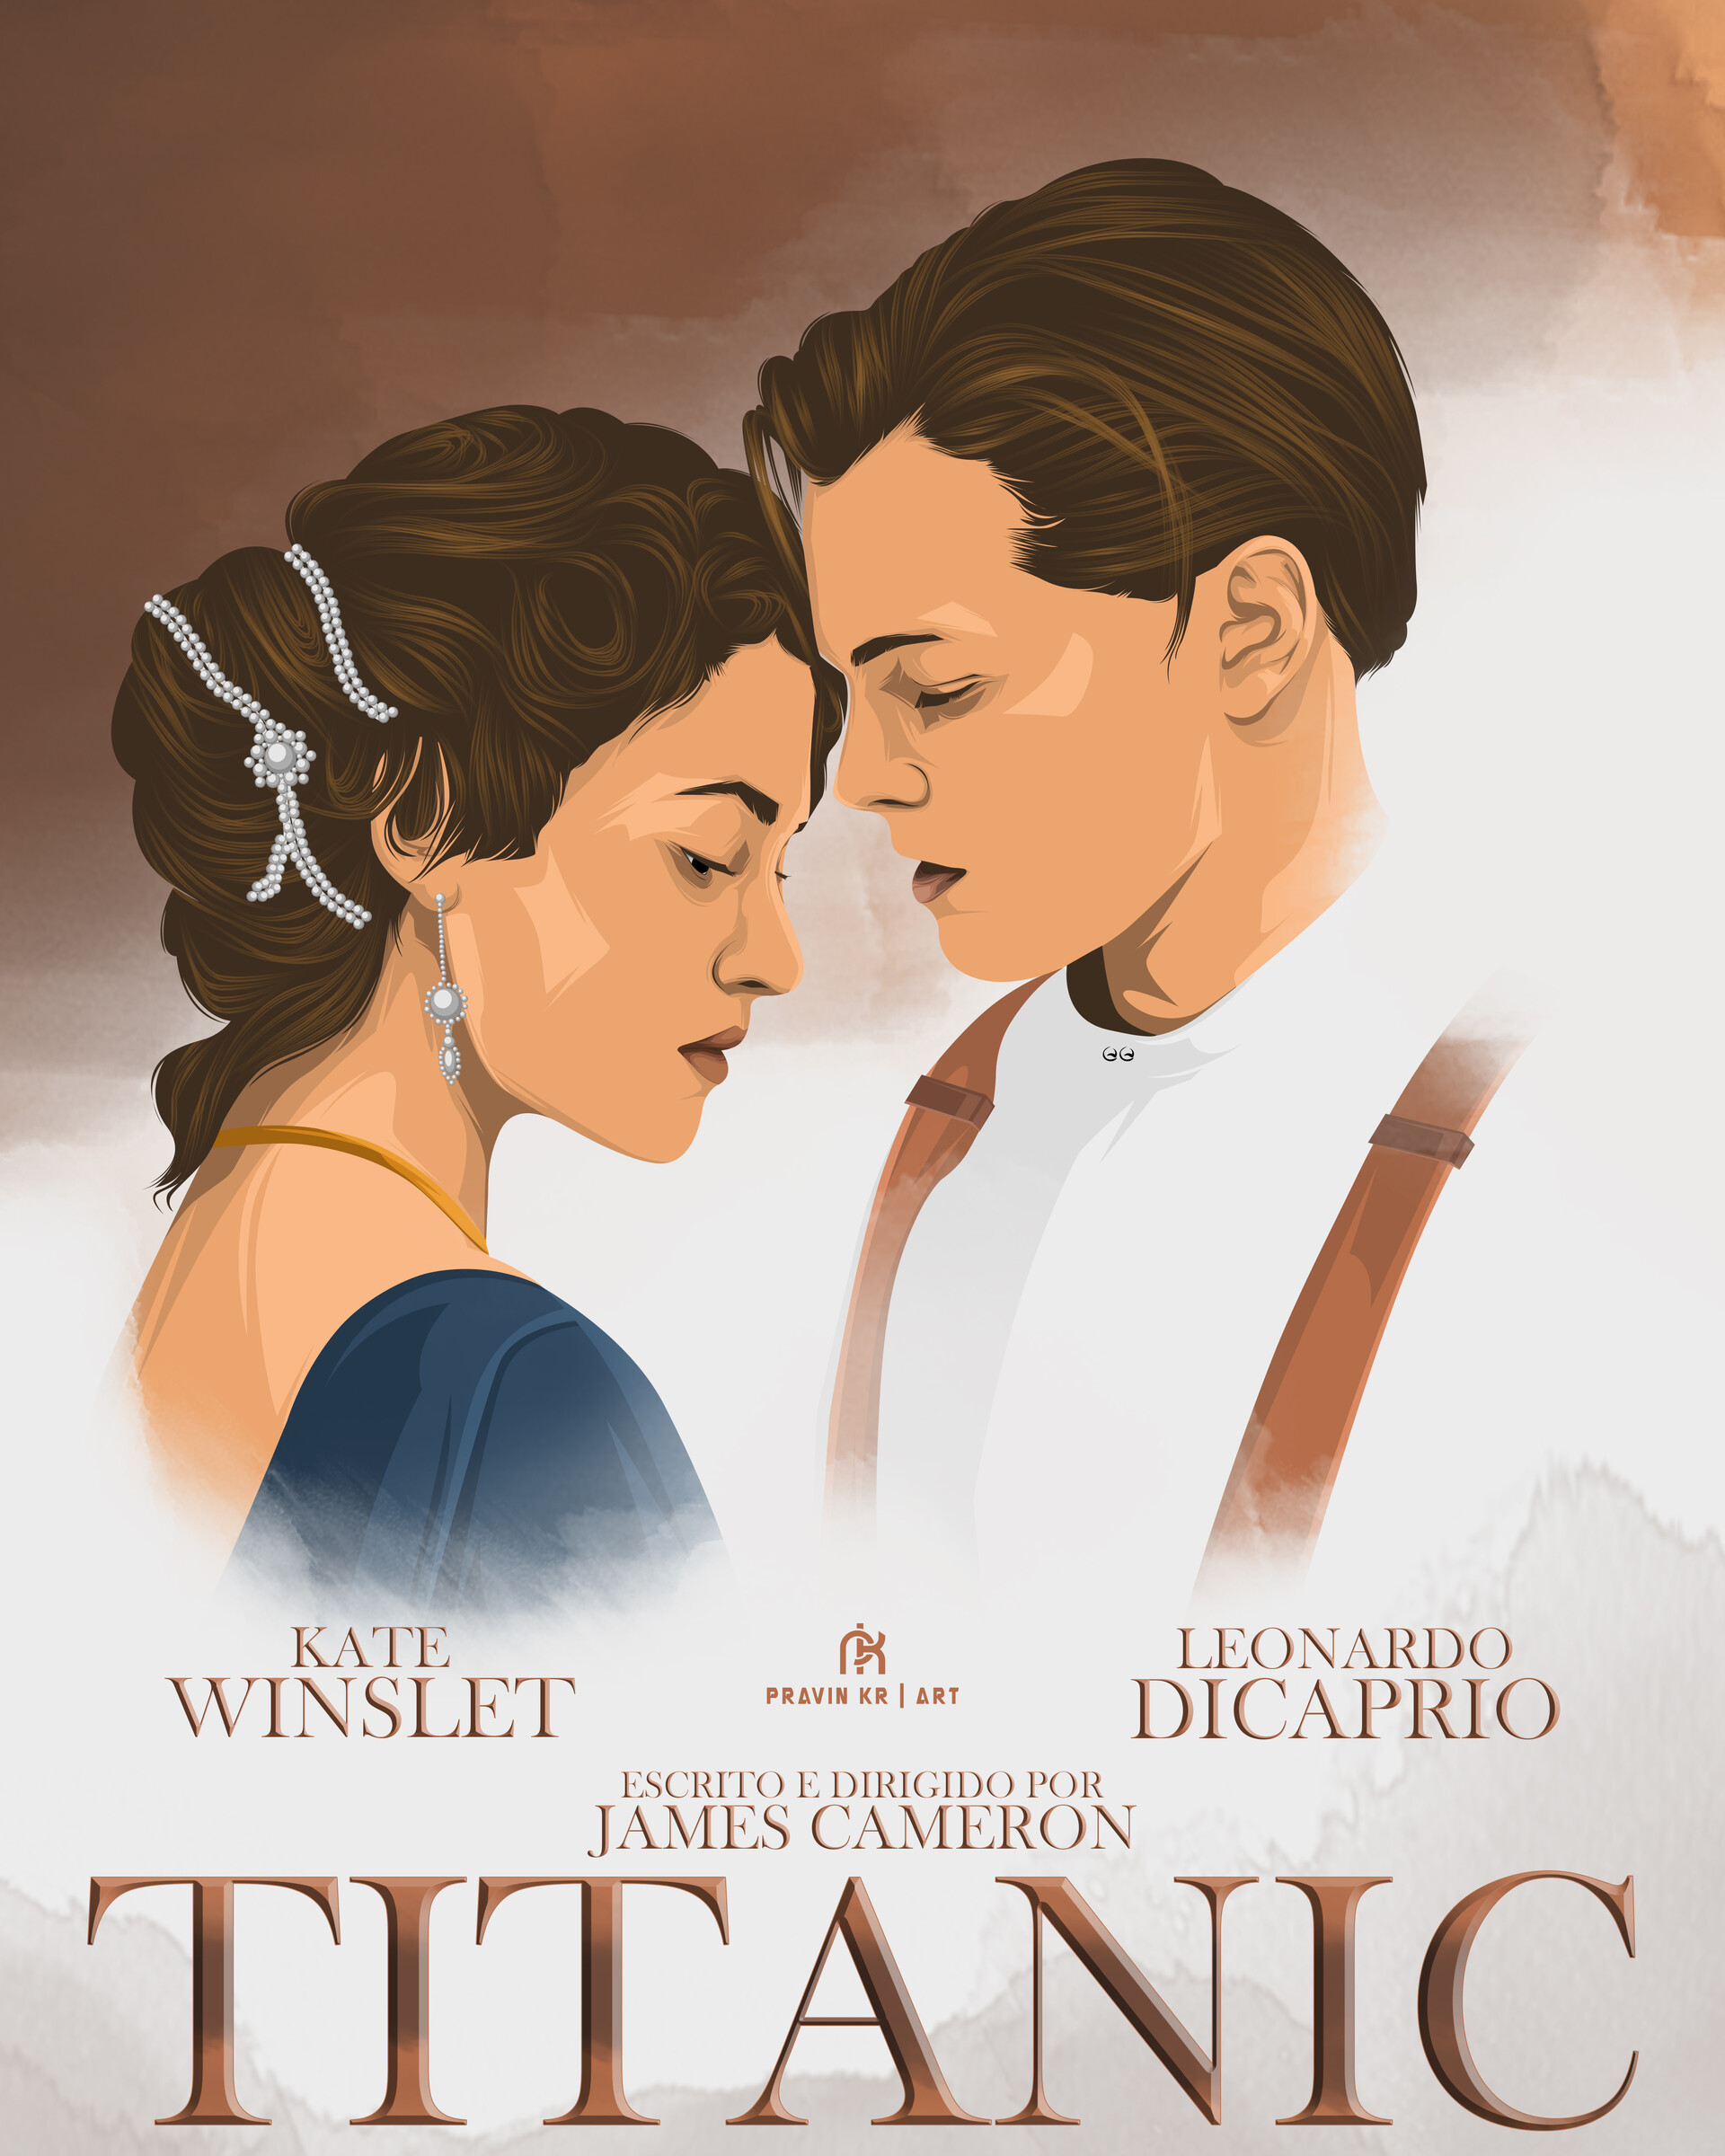 ArtStation - Titanic movie poster design